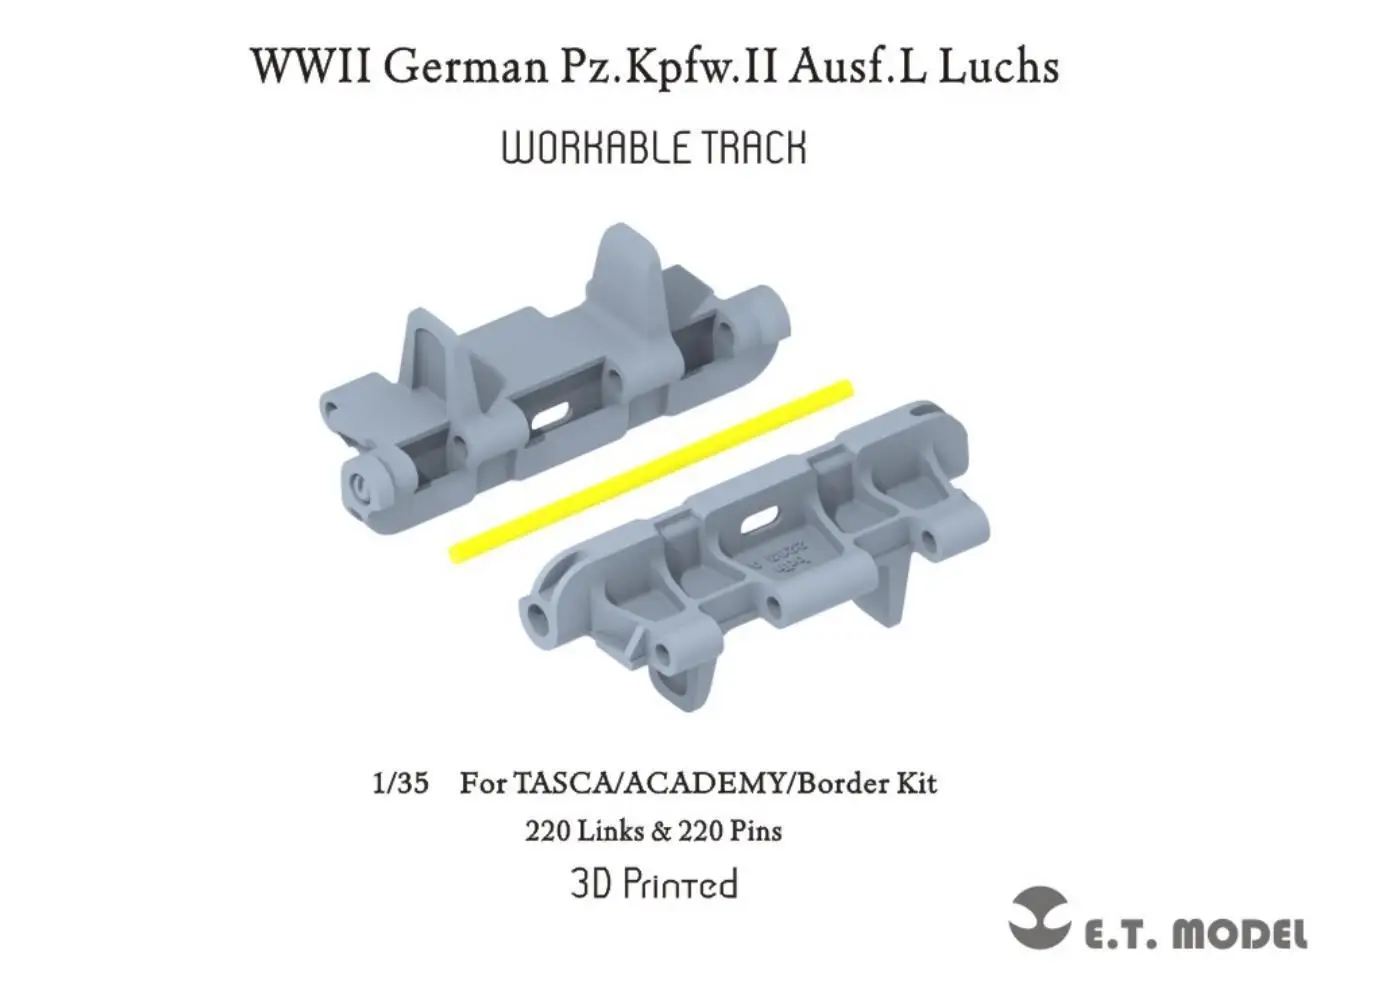 

ET MODEL P35-063 1/35 WWII German Pz.Kpfw.II Ausf.L Luchs Workable Track